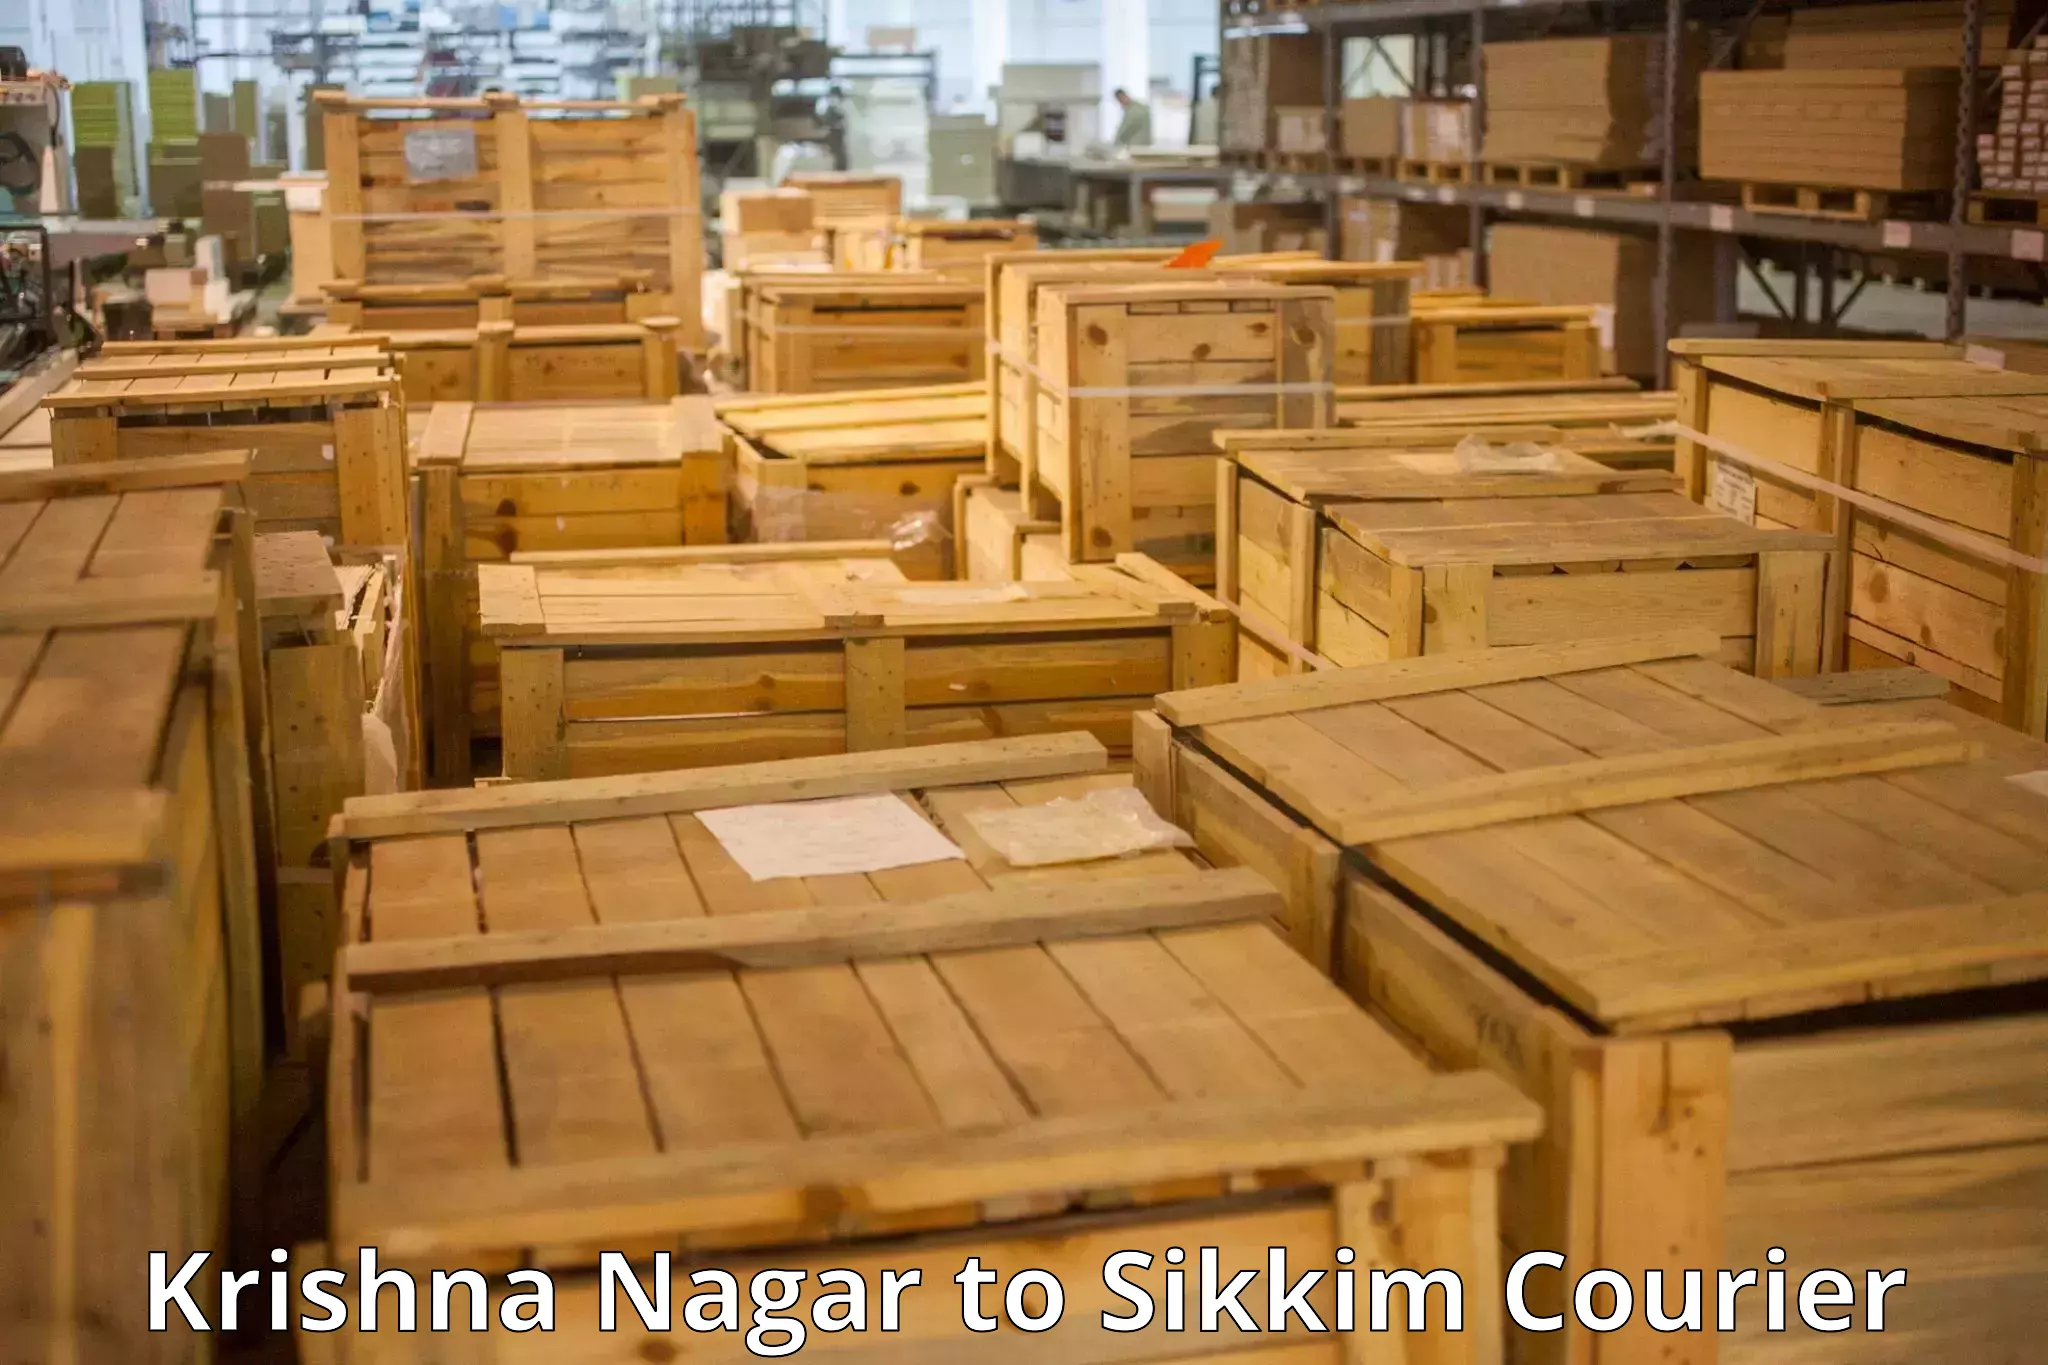 Luggage shipment specialists Krishna Nagar to East Sikkim